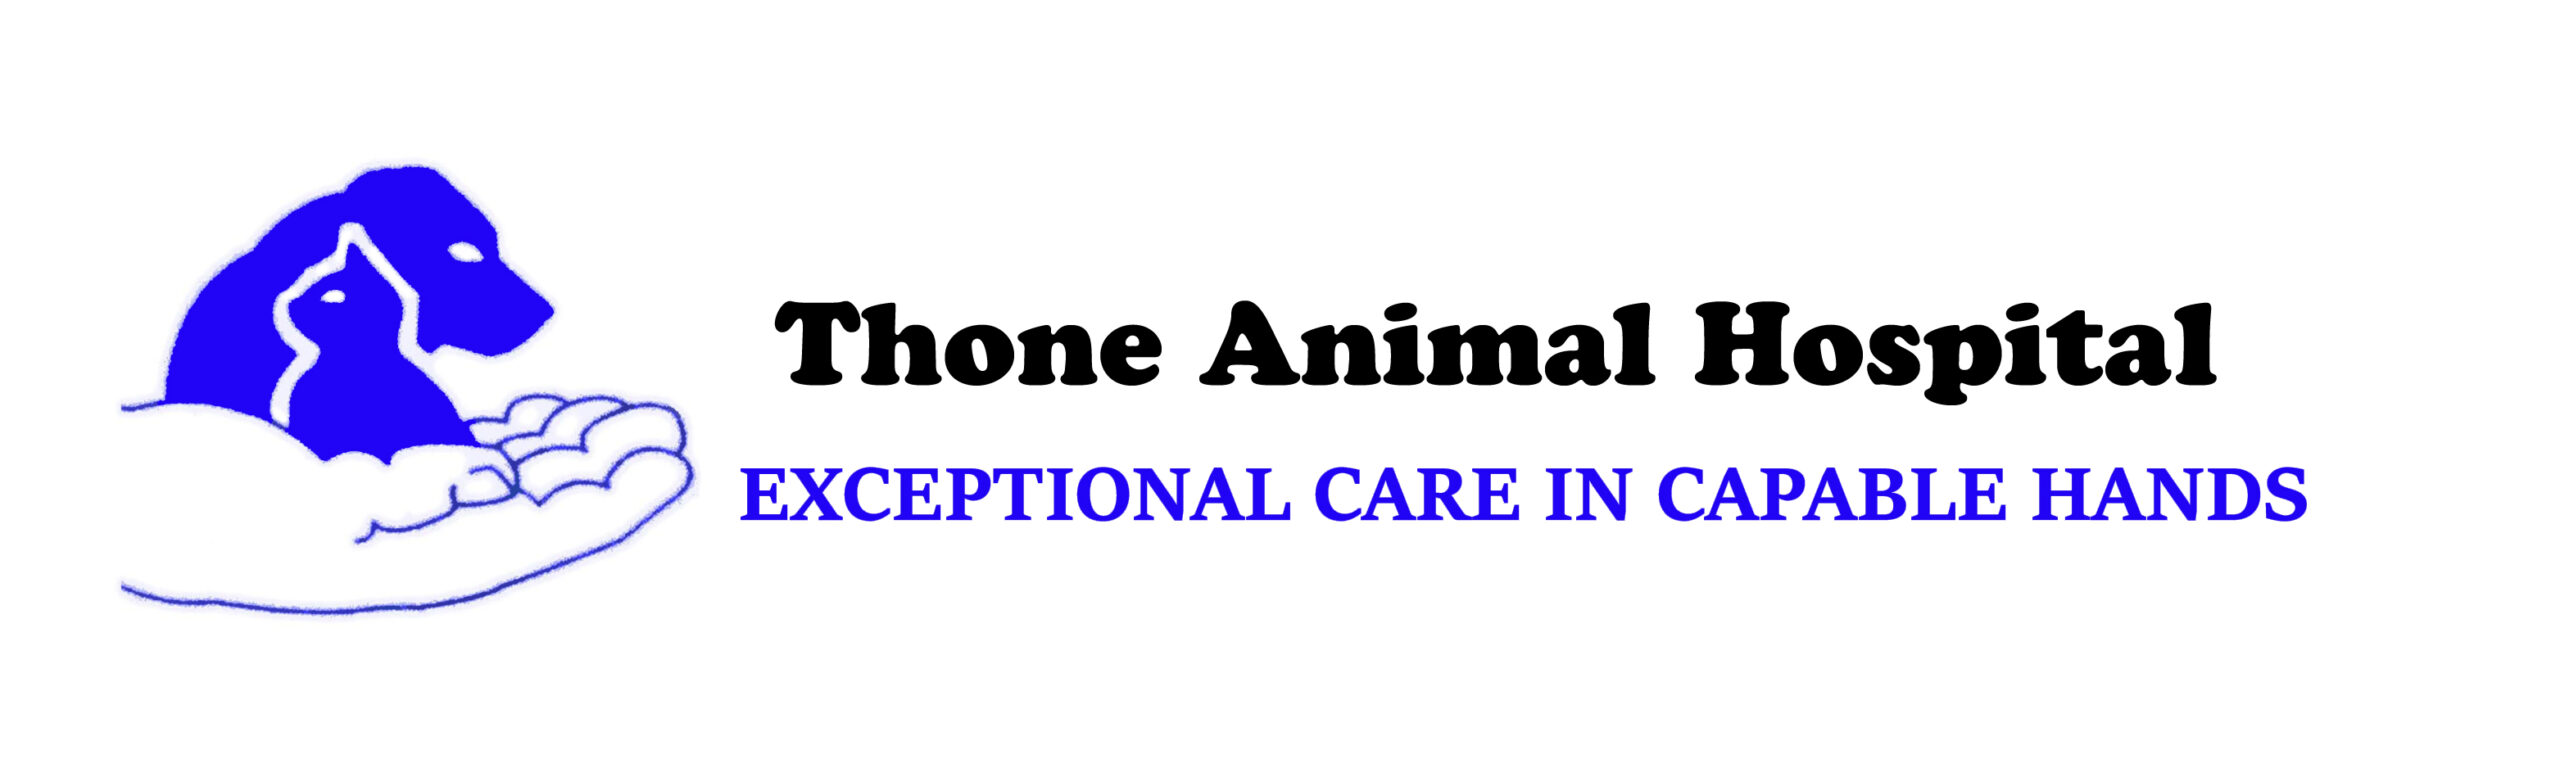 Thone Animal Hospital